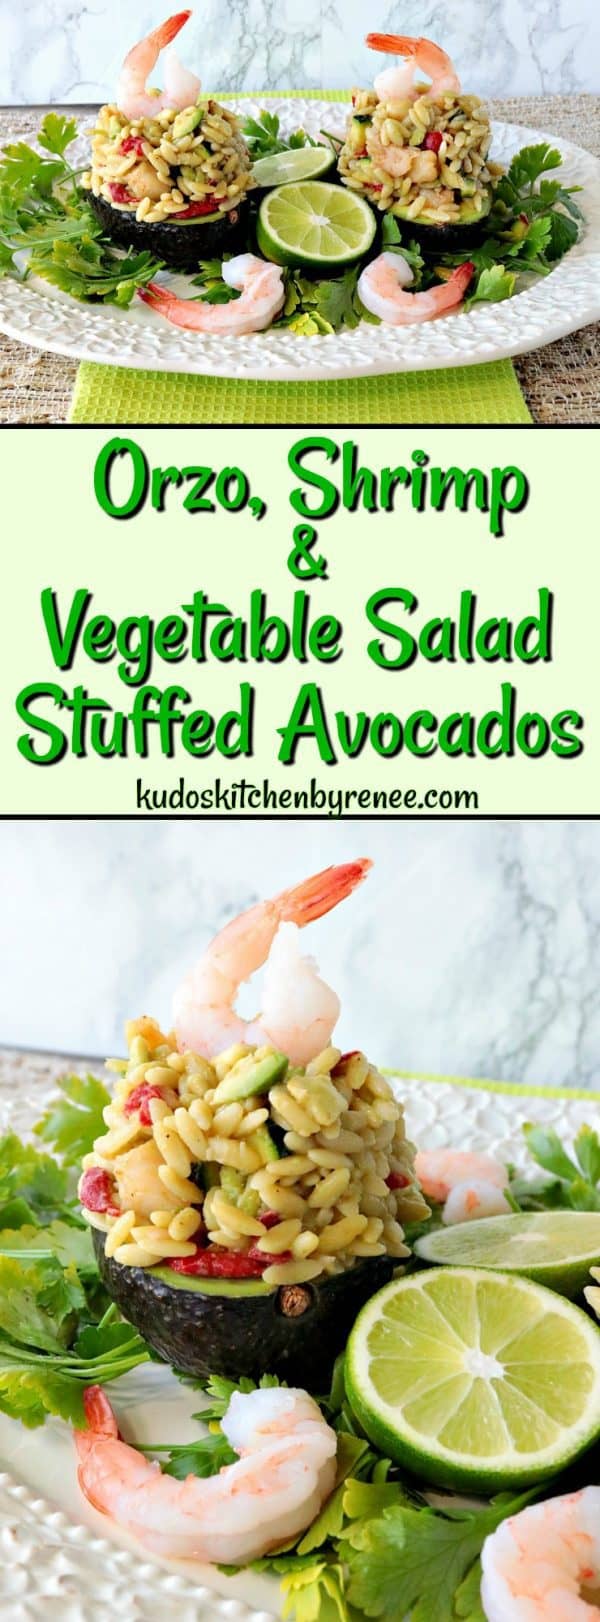 Orzo and Shrimp Stuffed Avocados Recipe - Kudos Kitchen by Renee